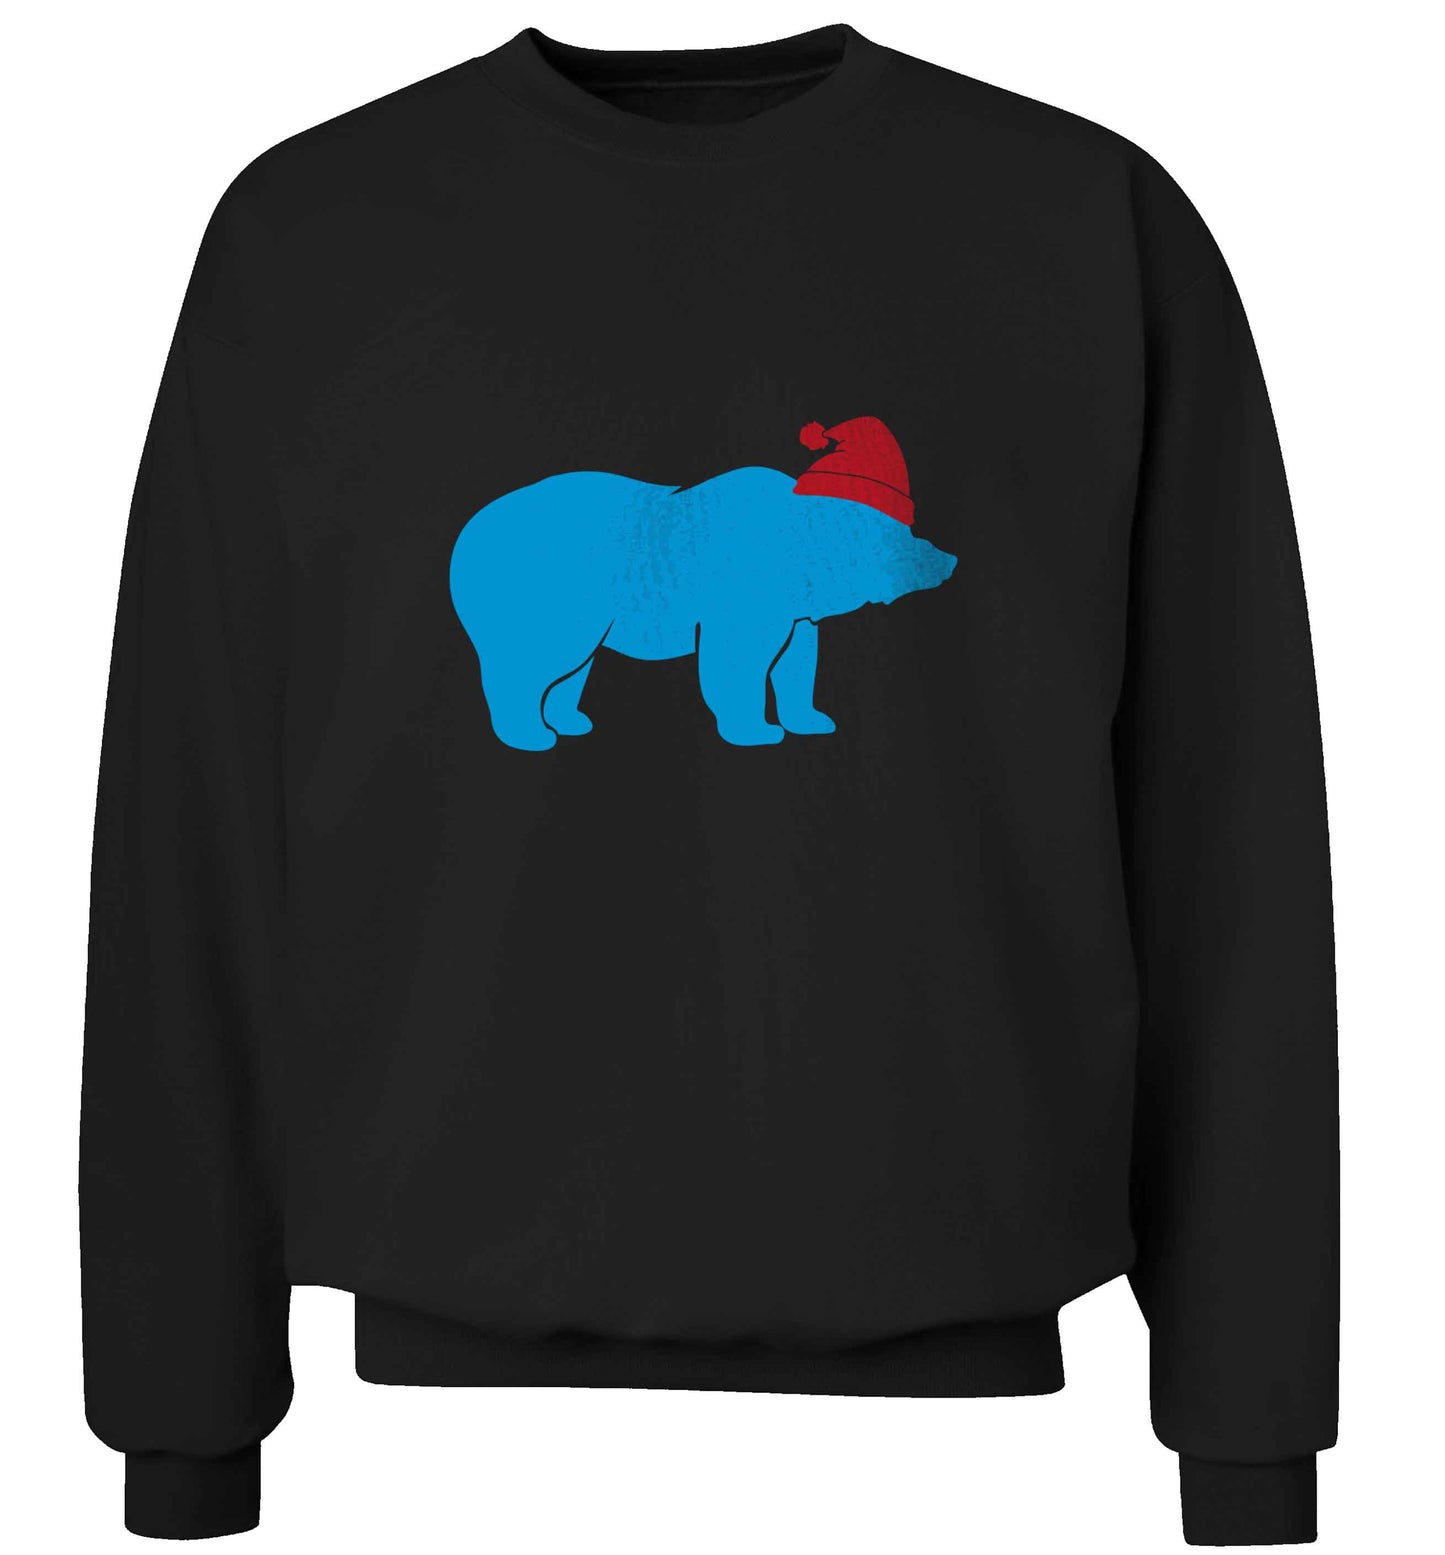 Blue bear Santa adult's unisex black sweater 2XL